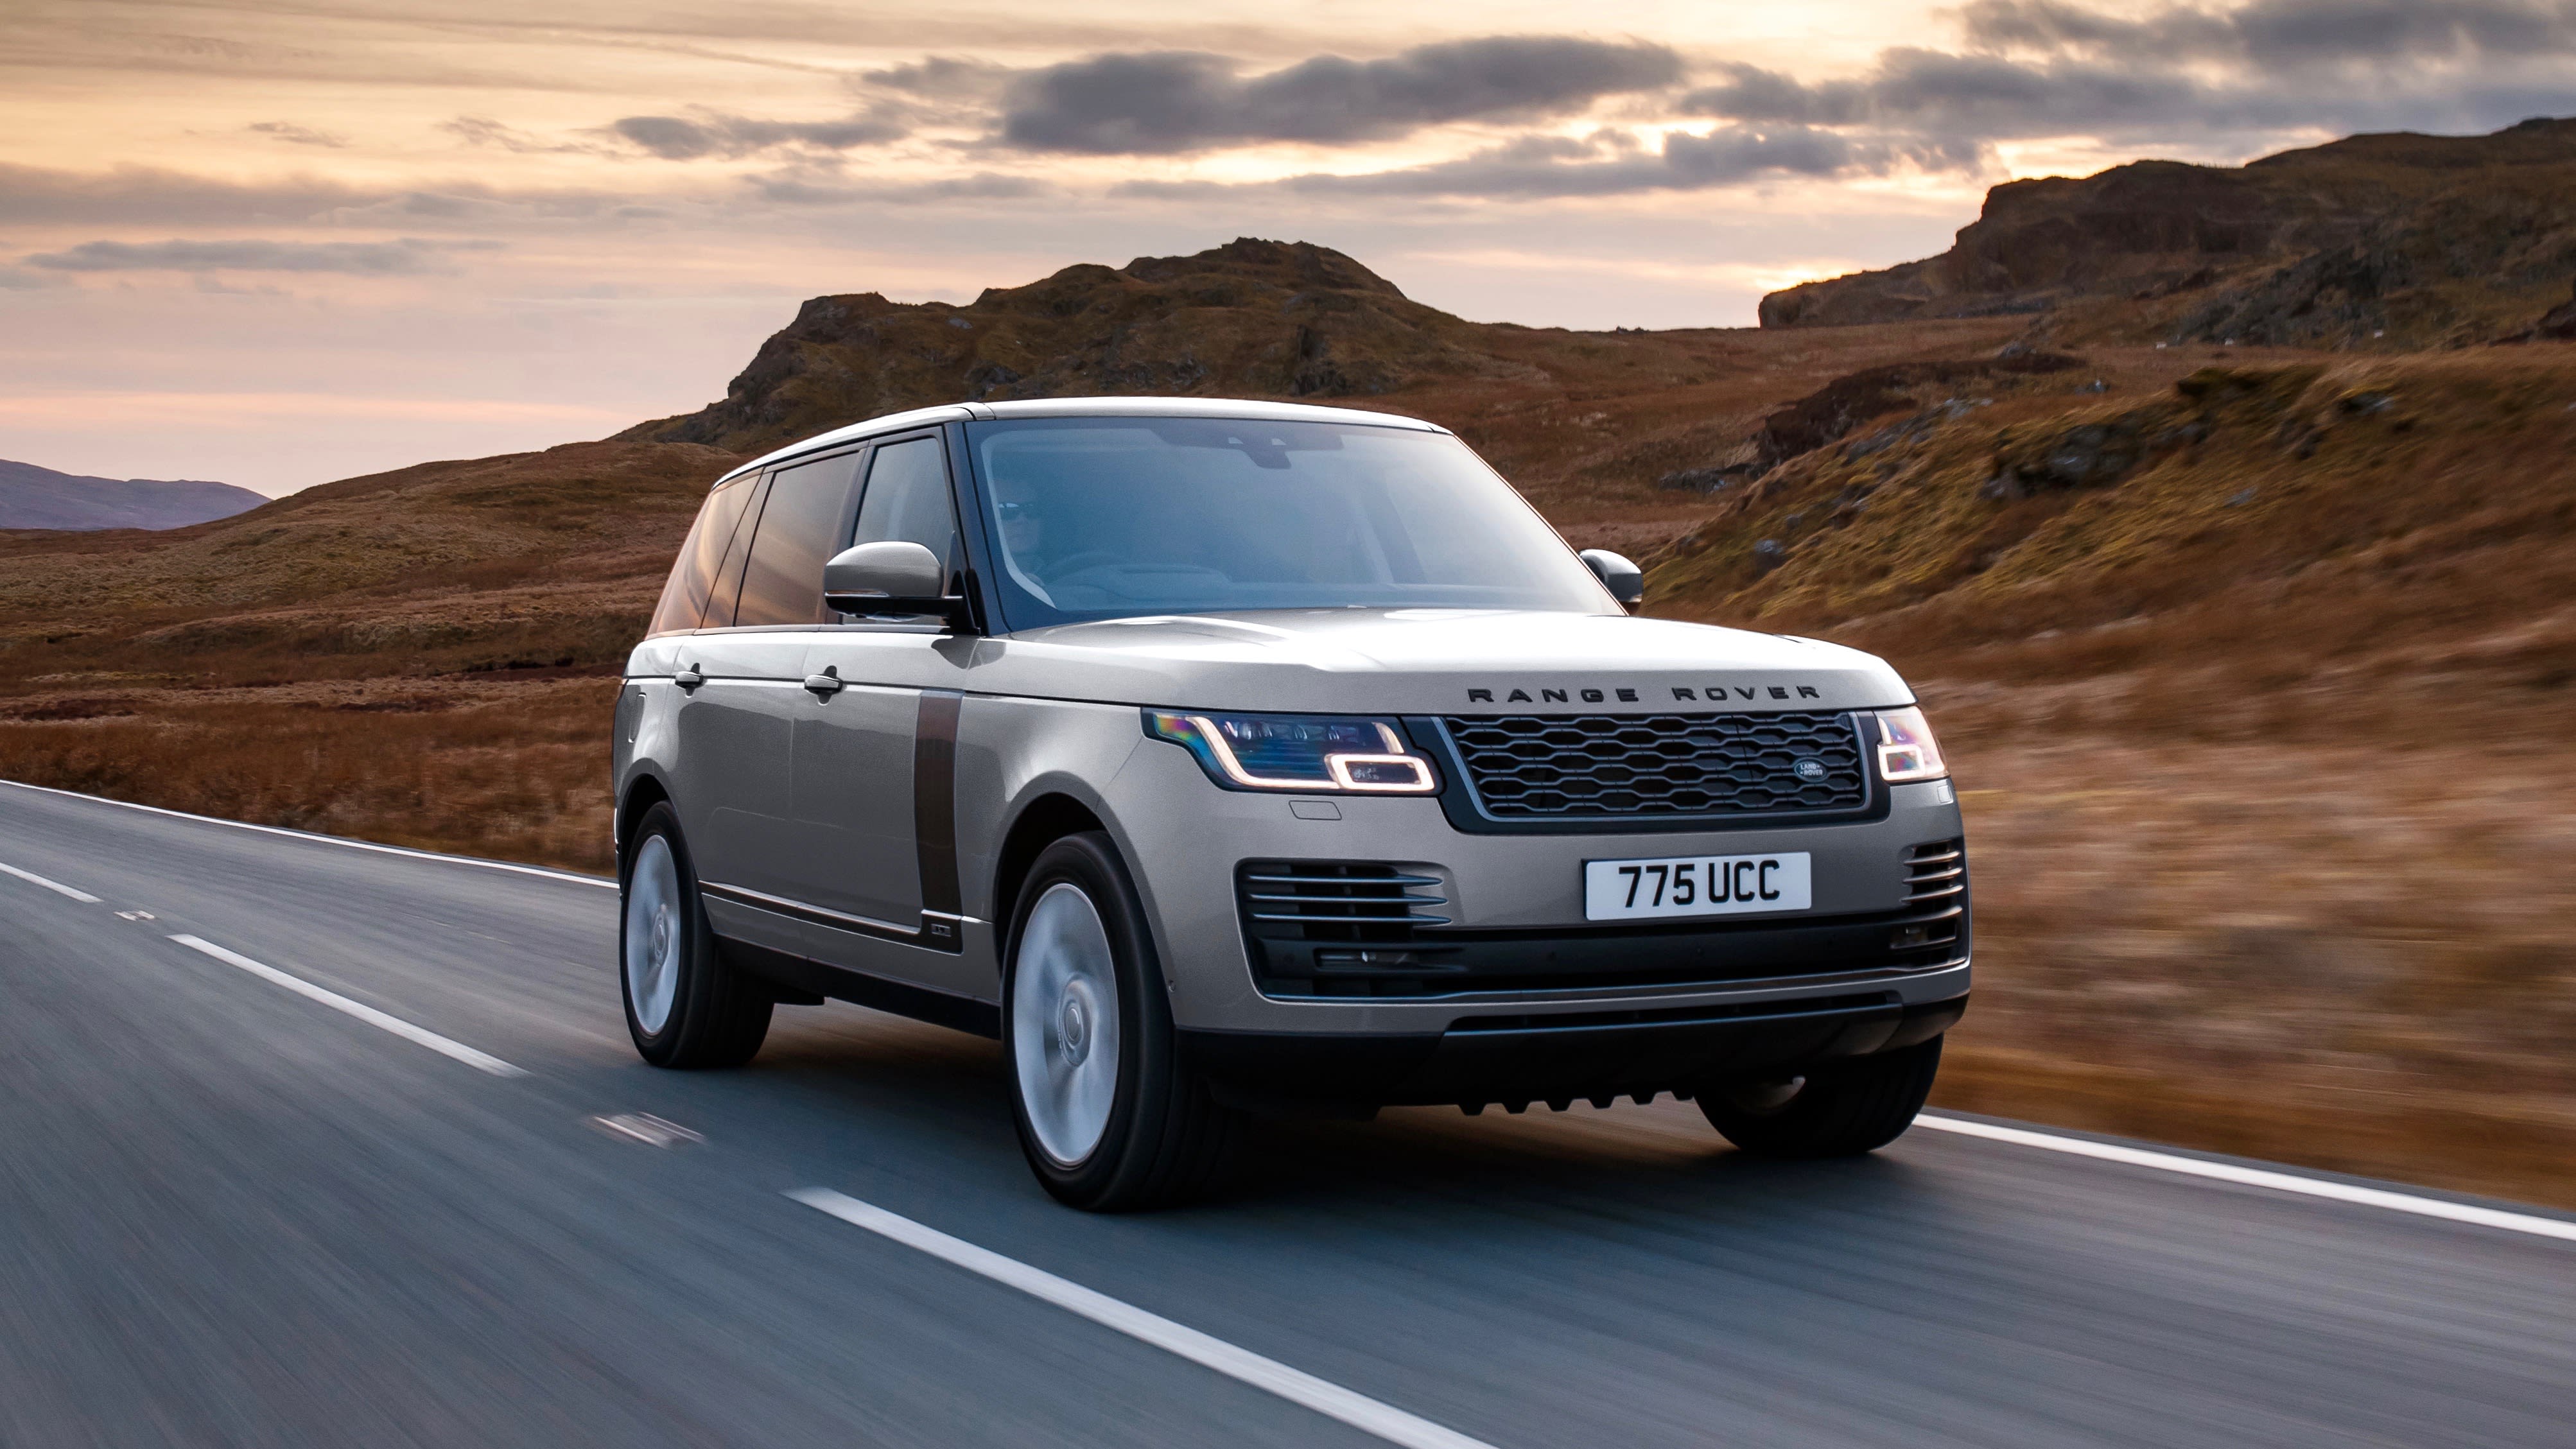 Range Rover 2019 adds new sixcylinder petrol engine Car